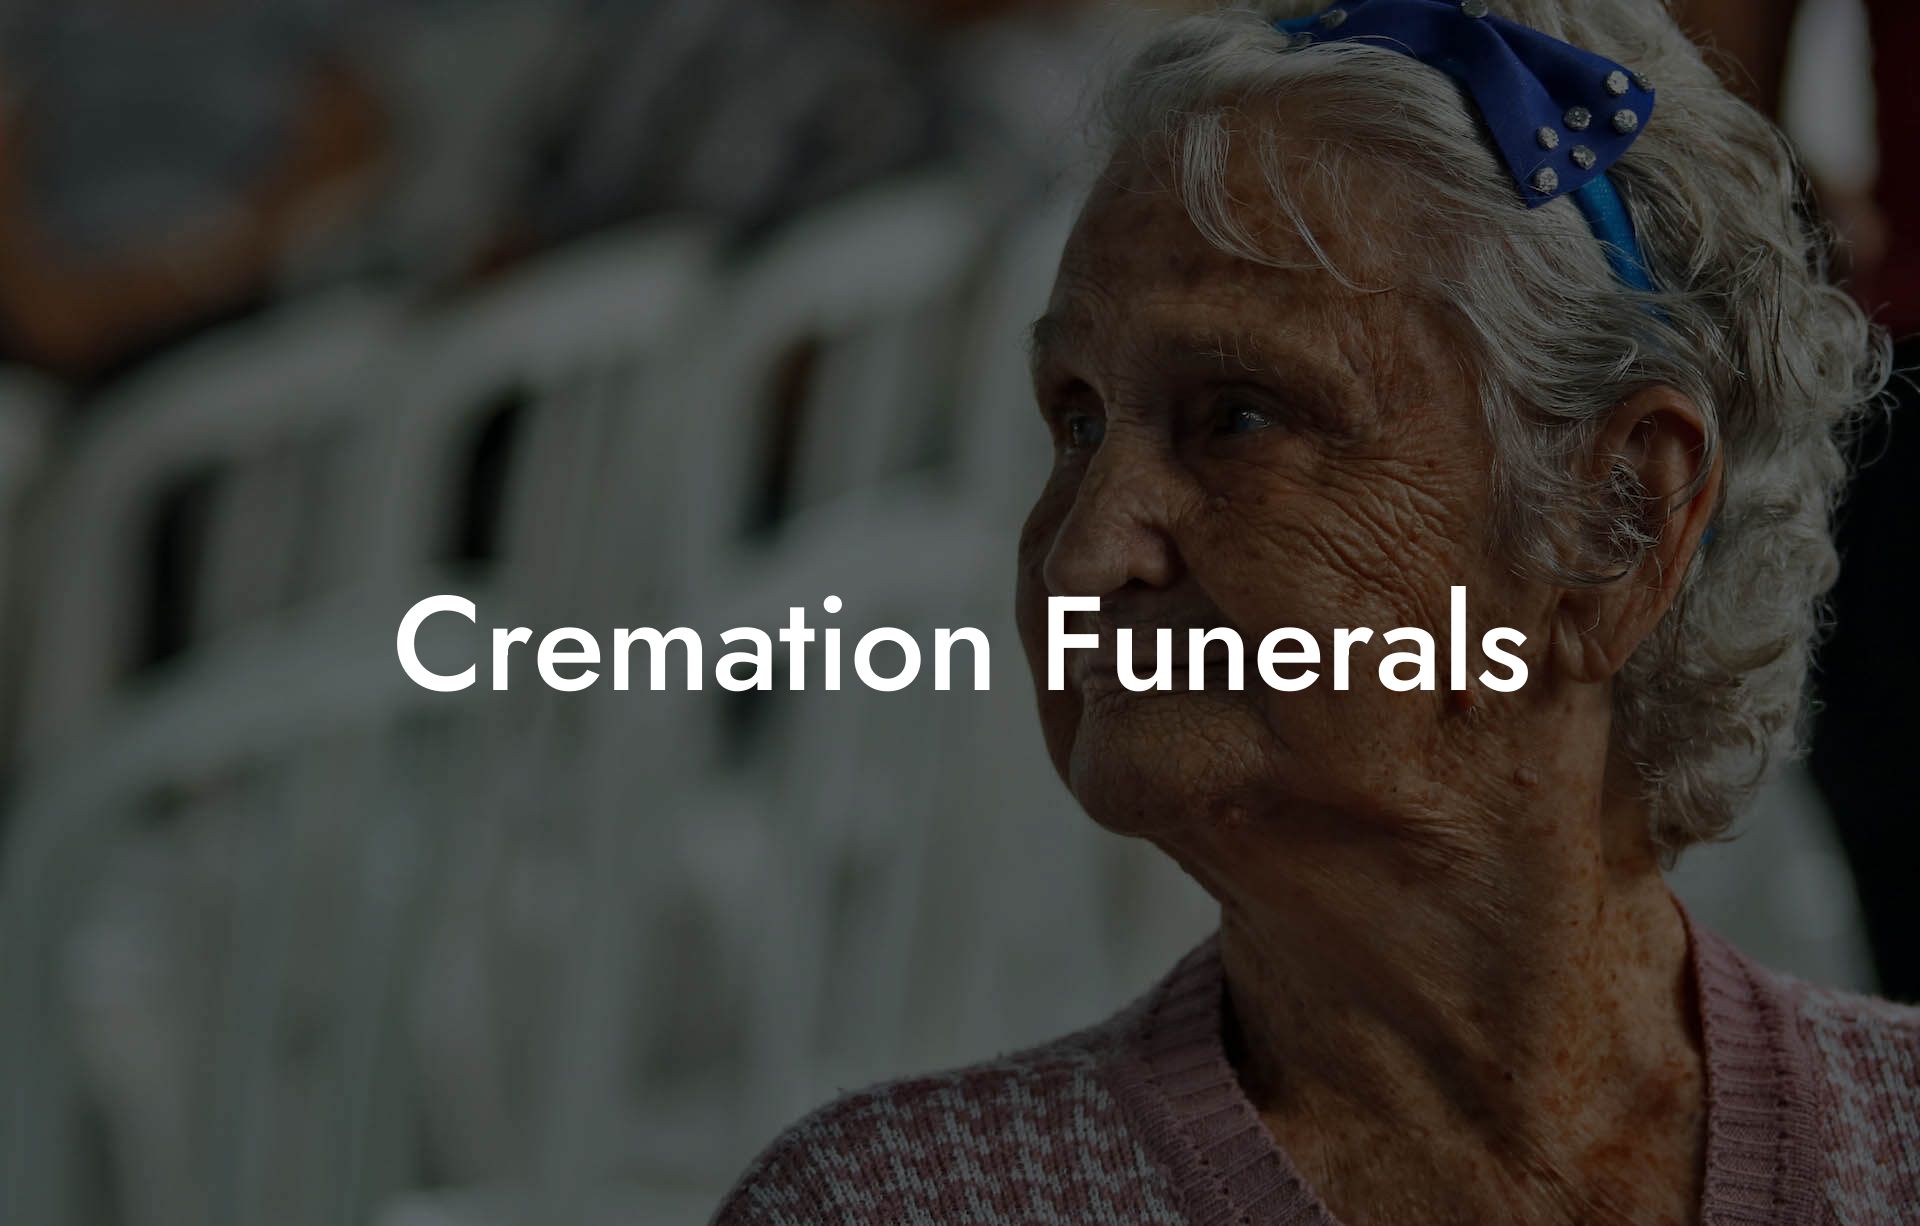 Cremation Funerals